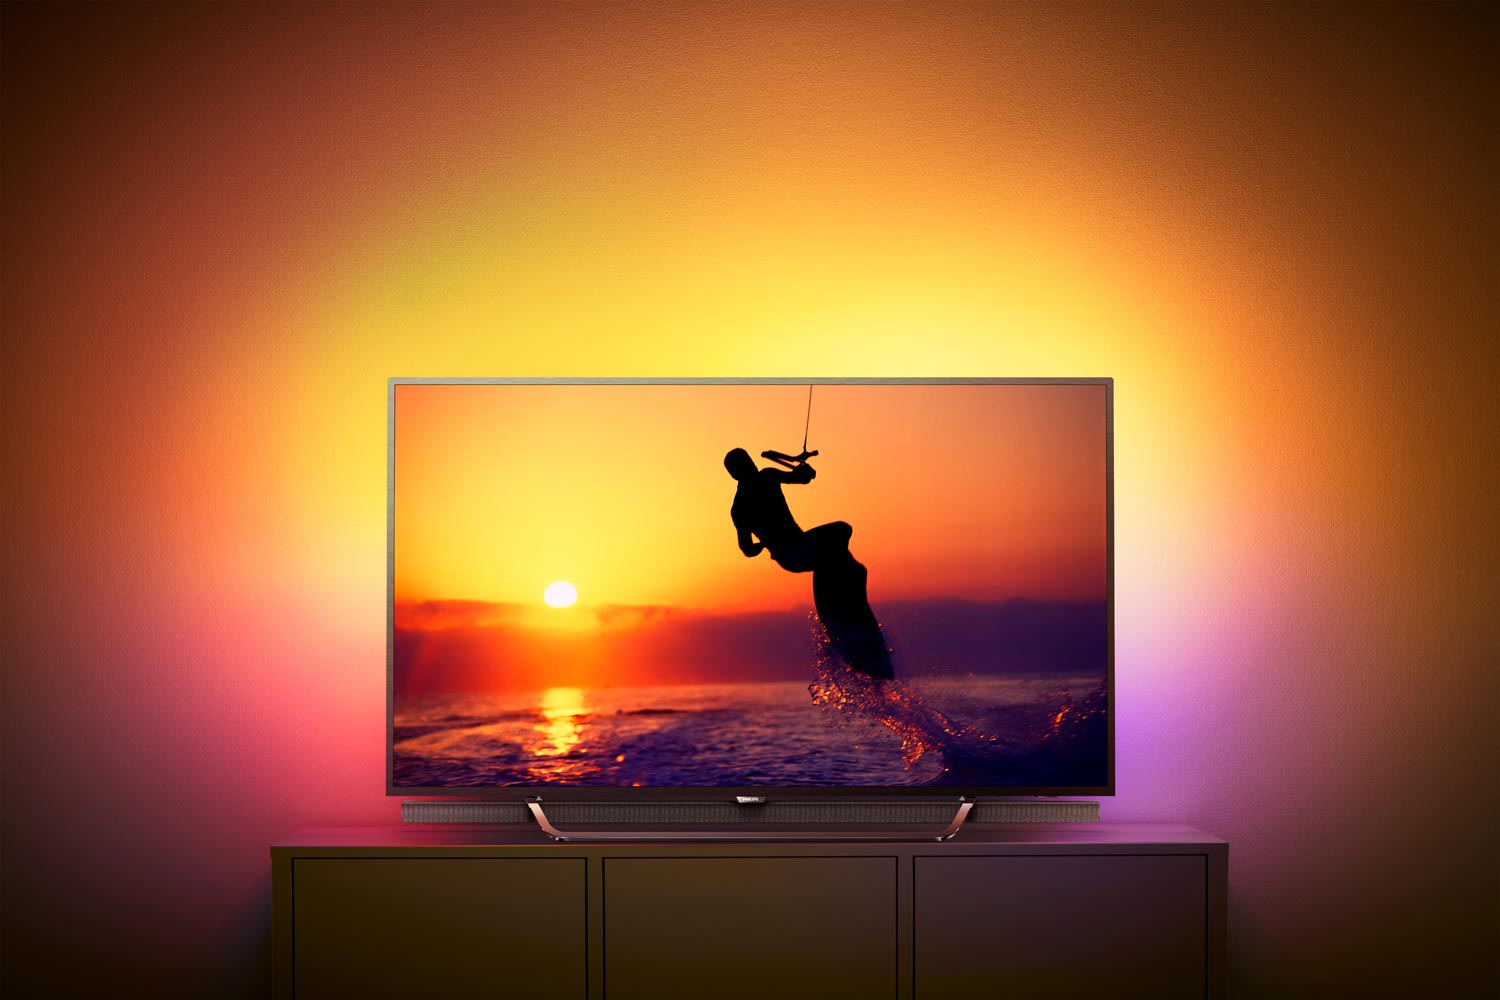 mangel kradse klæde sig ud Philips unveils its first quantum dot LCD TV range with 8602 review -  FlatpanelsHD